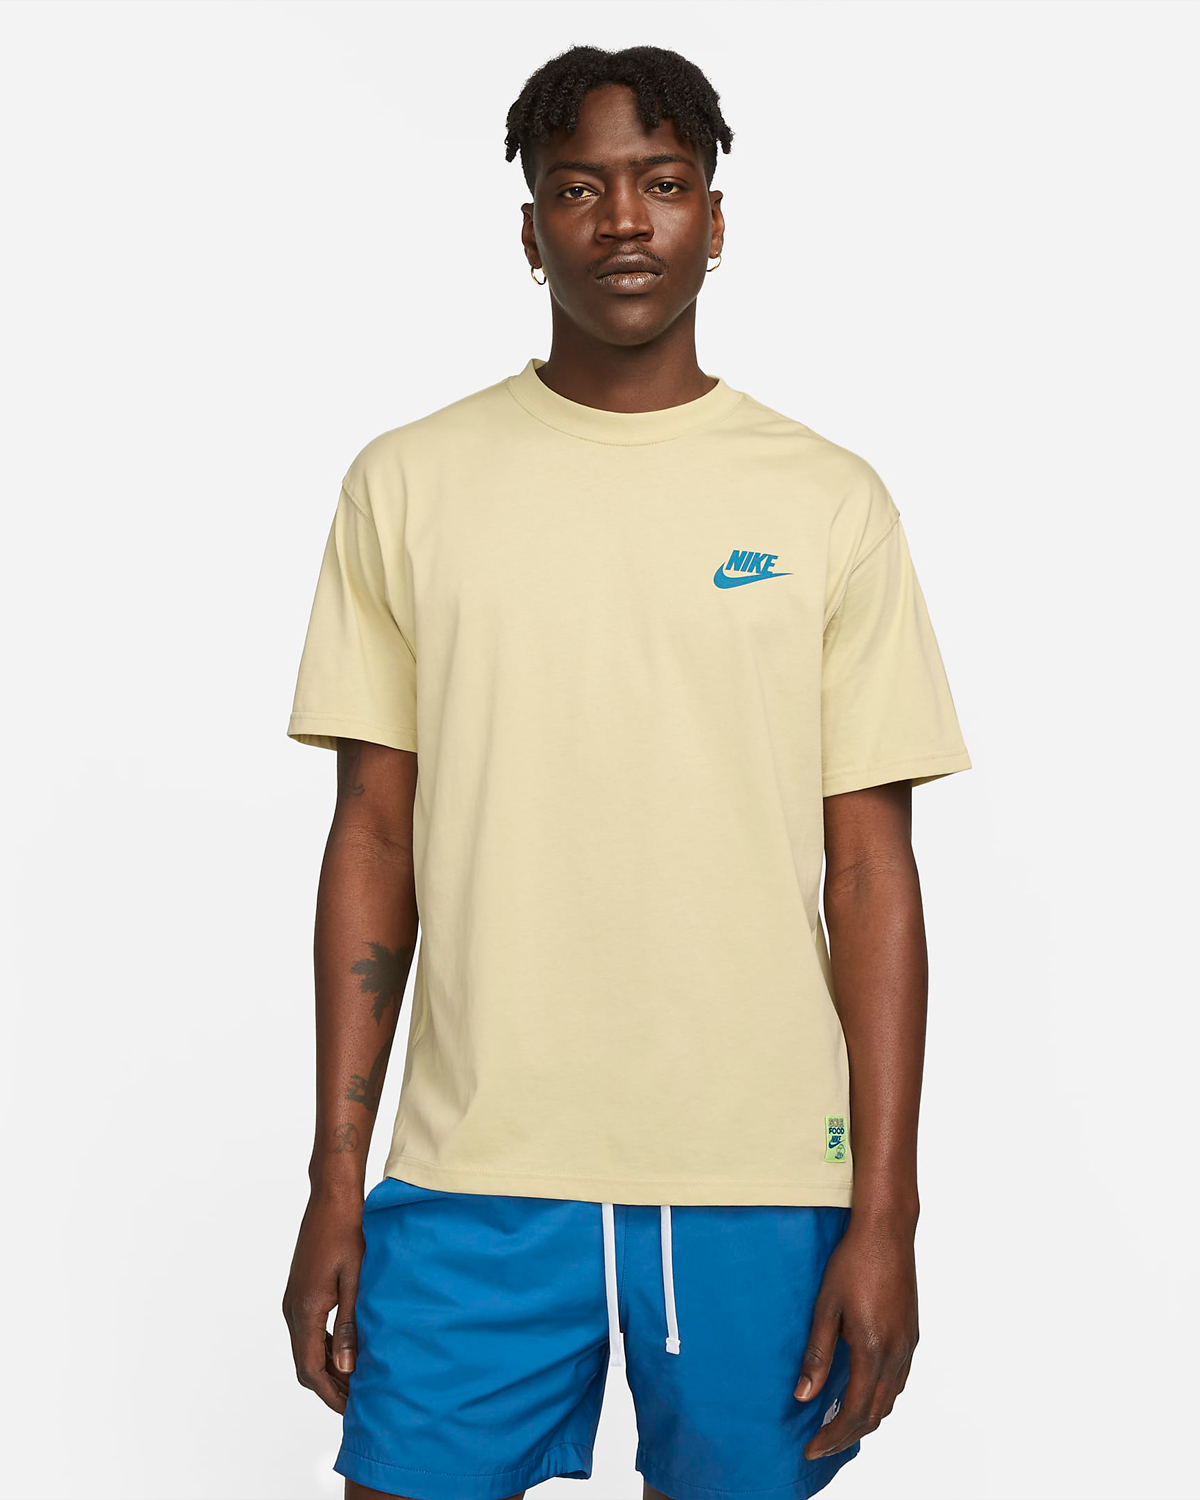 Nike-Sportswear-T-Shirt-Team-Gold